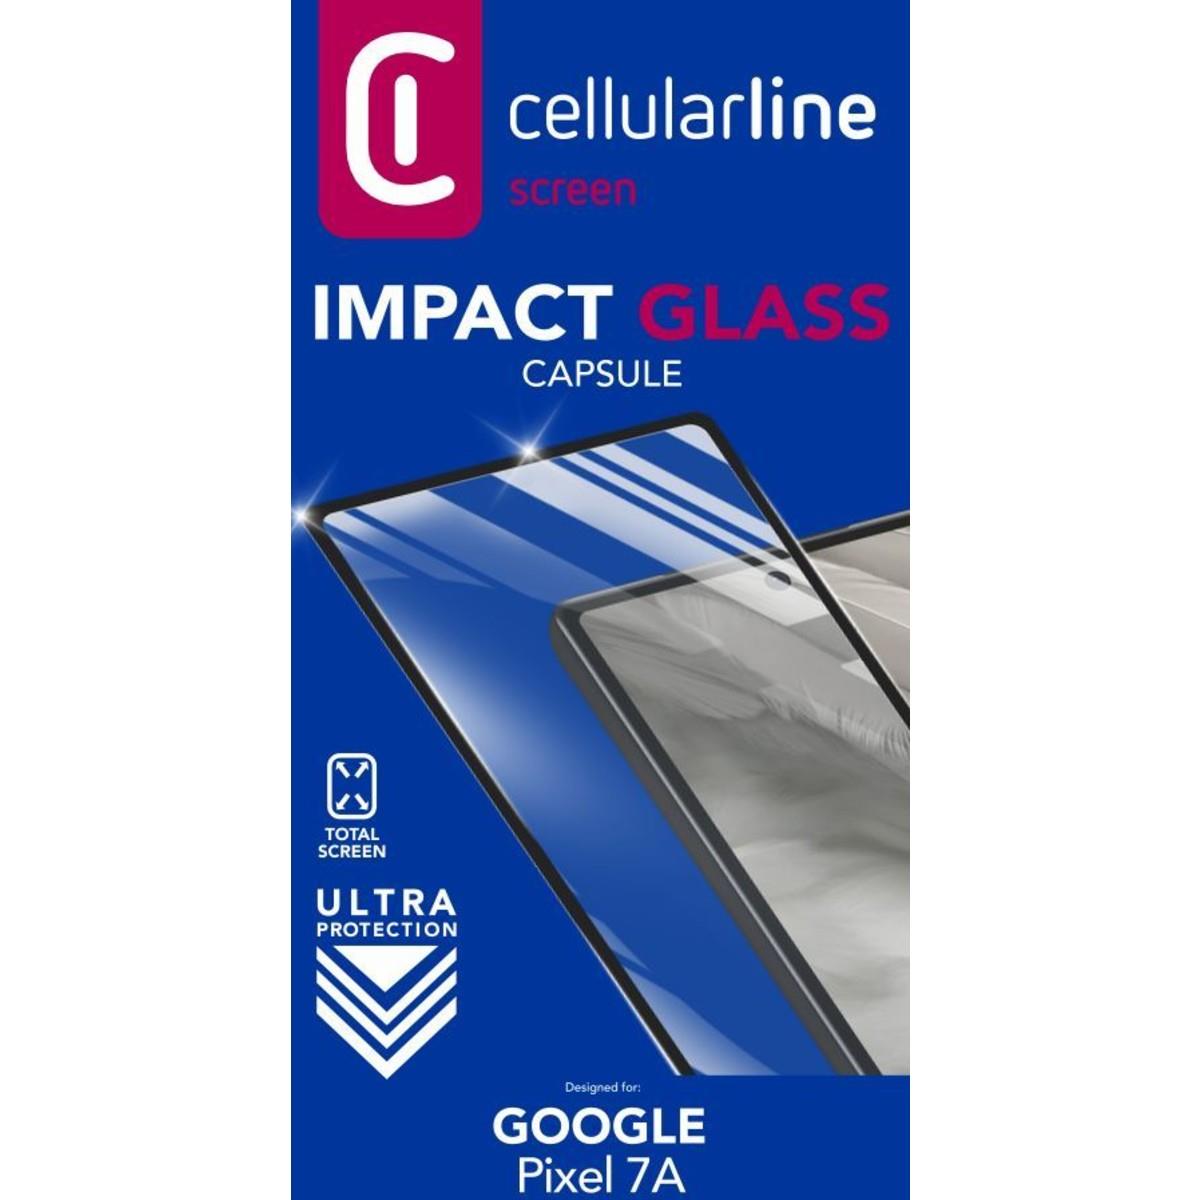 Schutzglas IMPACT GLASS CAPSULE für Google Pixel 7A